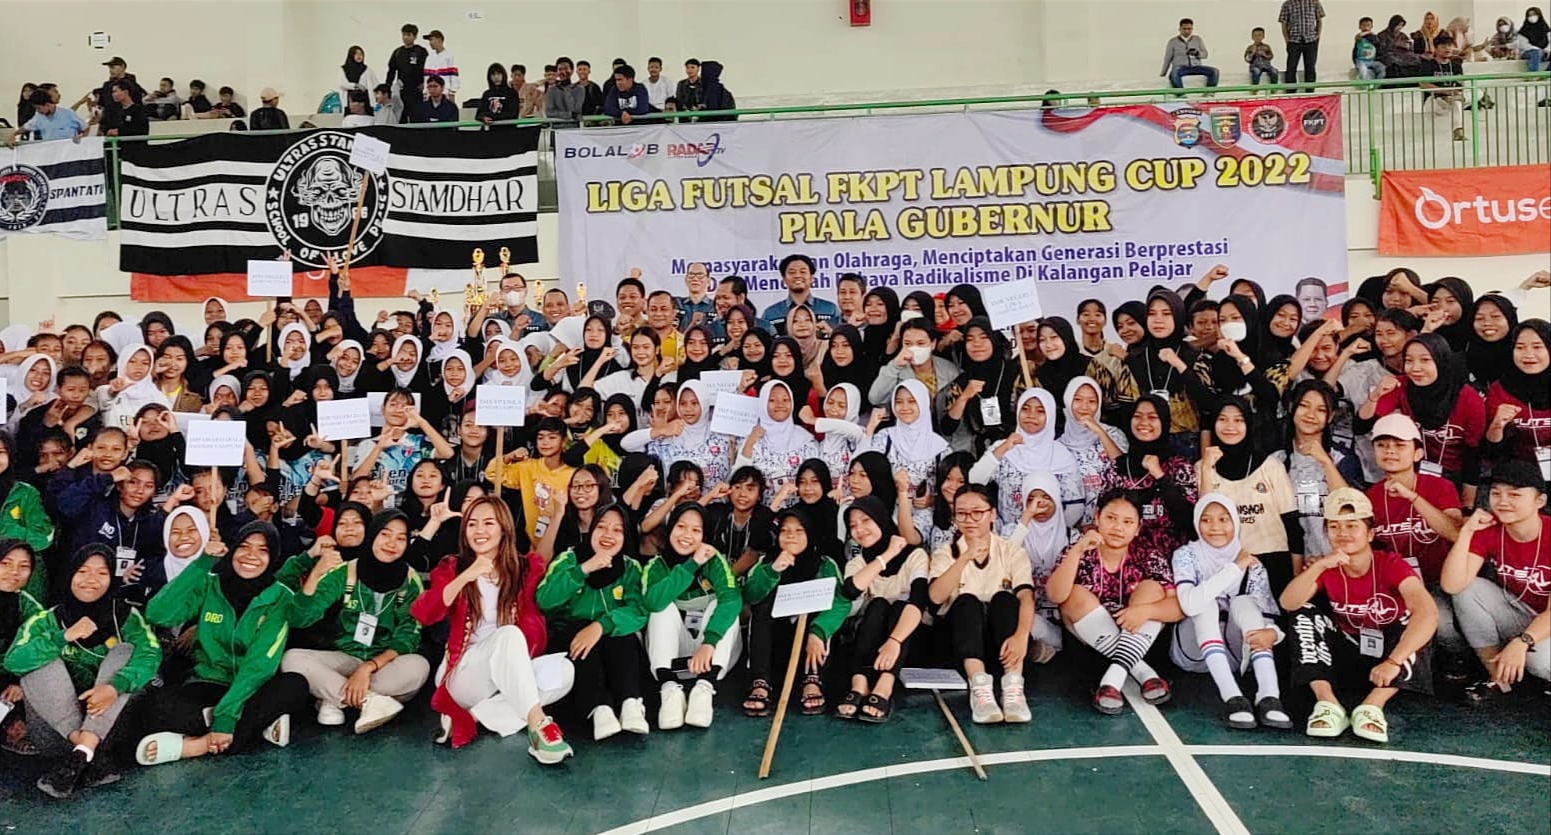 Ini SMP-SMA yang Lolos Delapan Besar Liga Futsal FKPT Lampung Cup 2022 